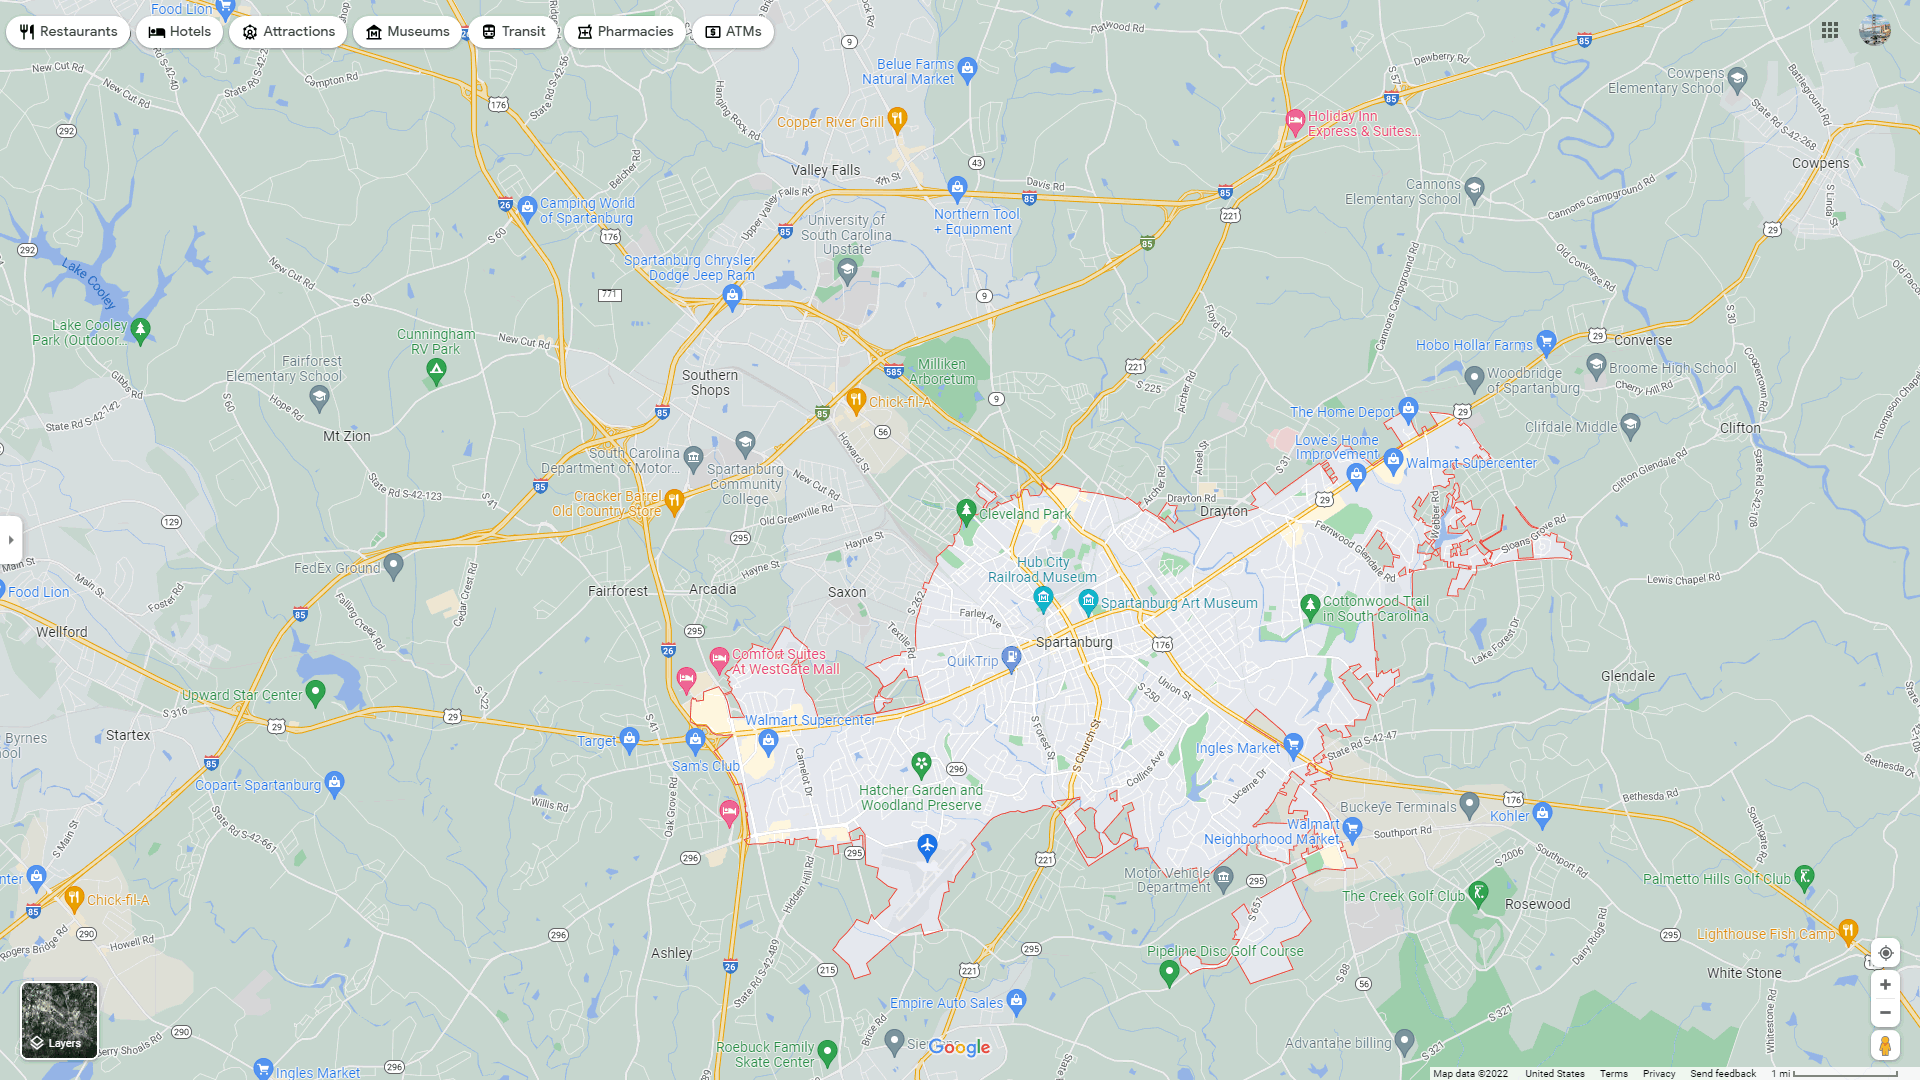 Spartanburg map